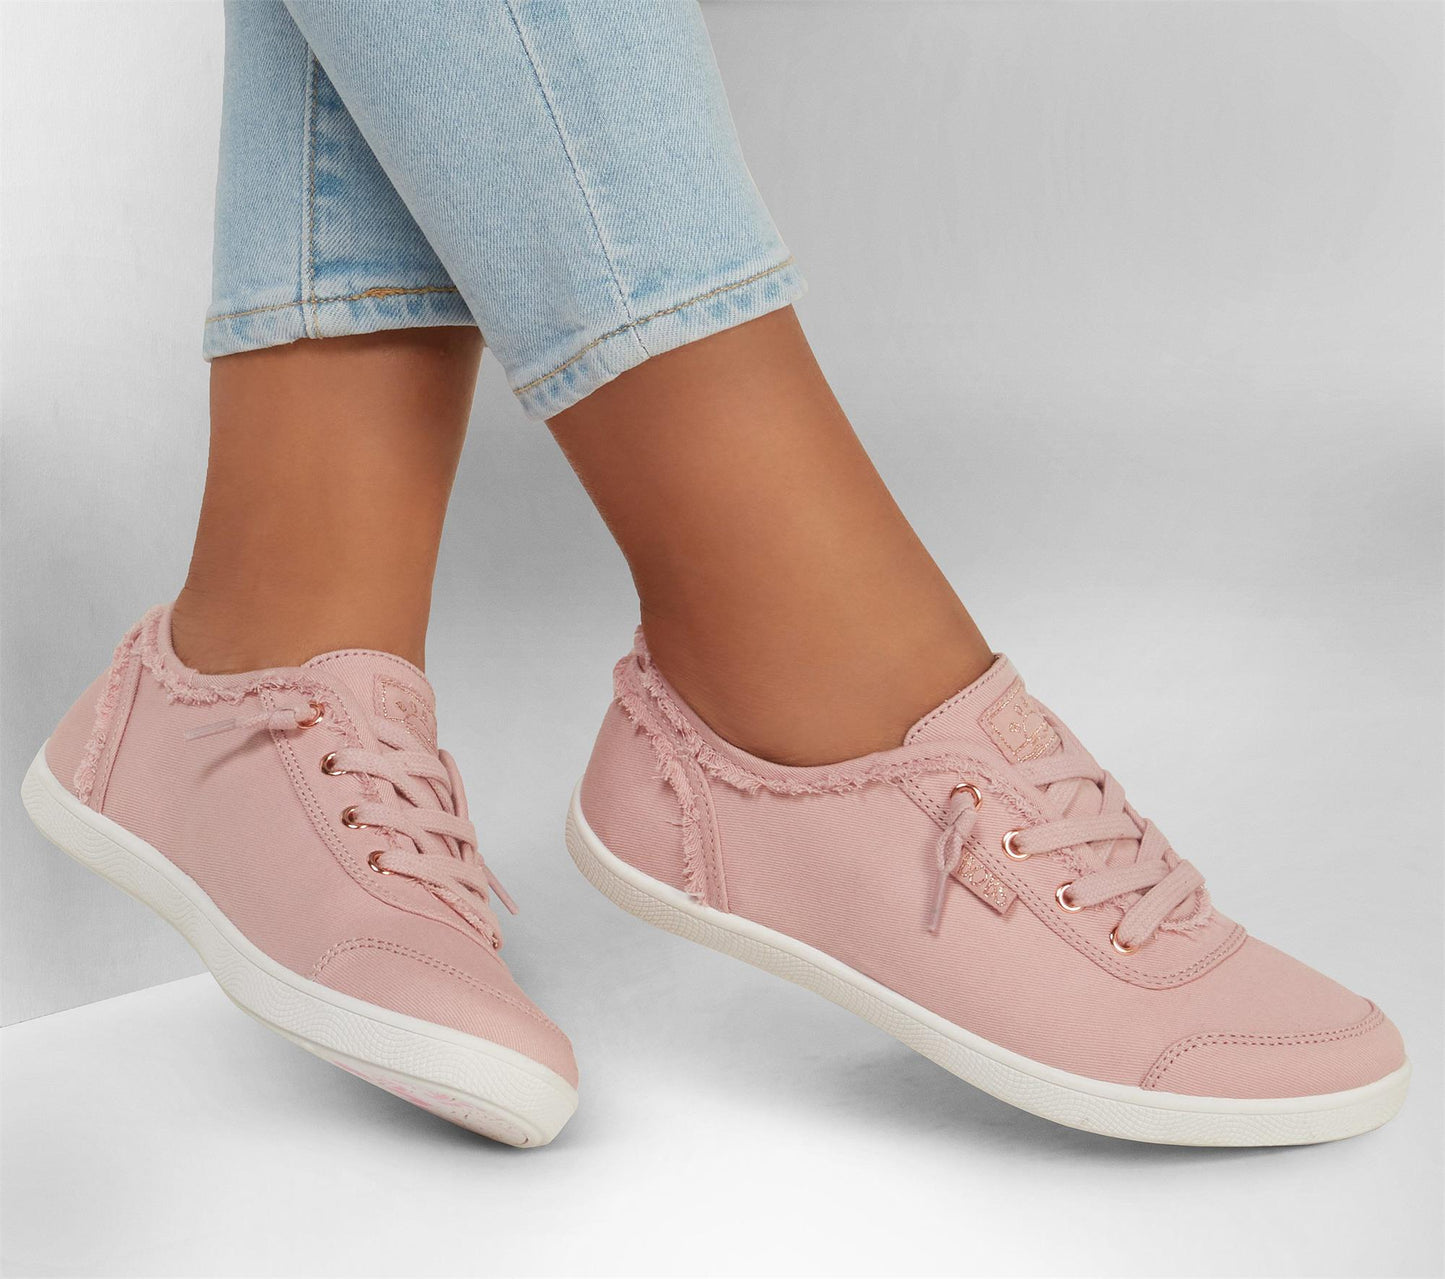 Skechers Womens Bobs B Cute Rose Pink Canvas Vegan Slip On Pumps Shoes